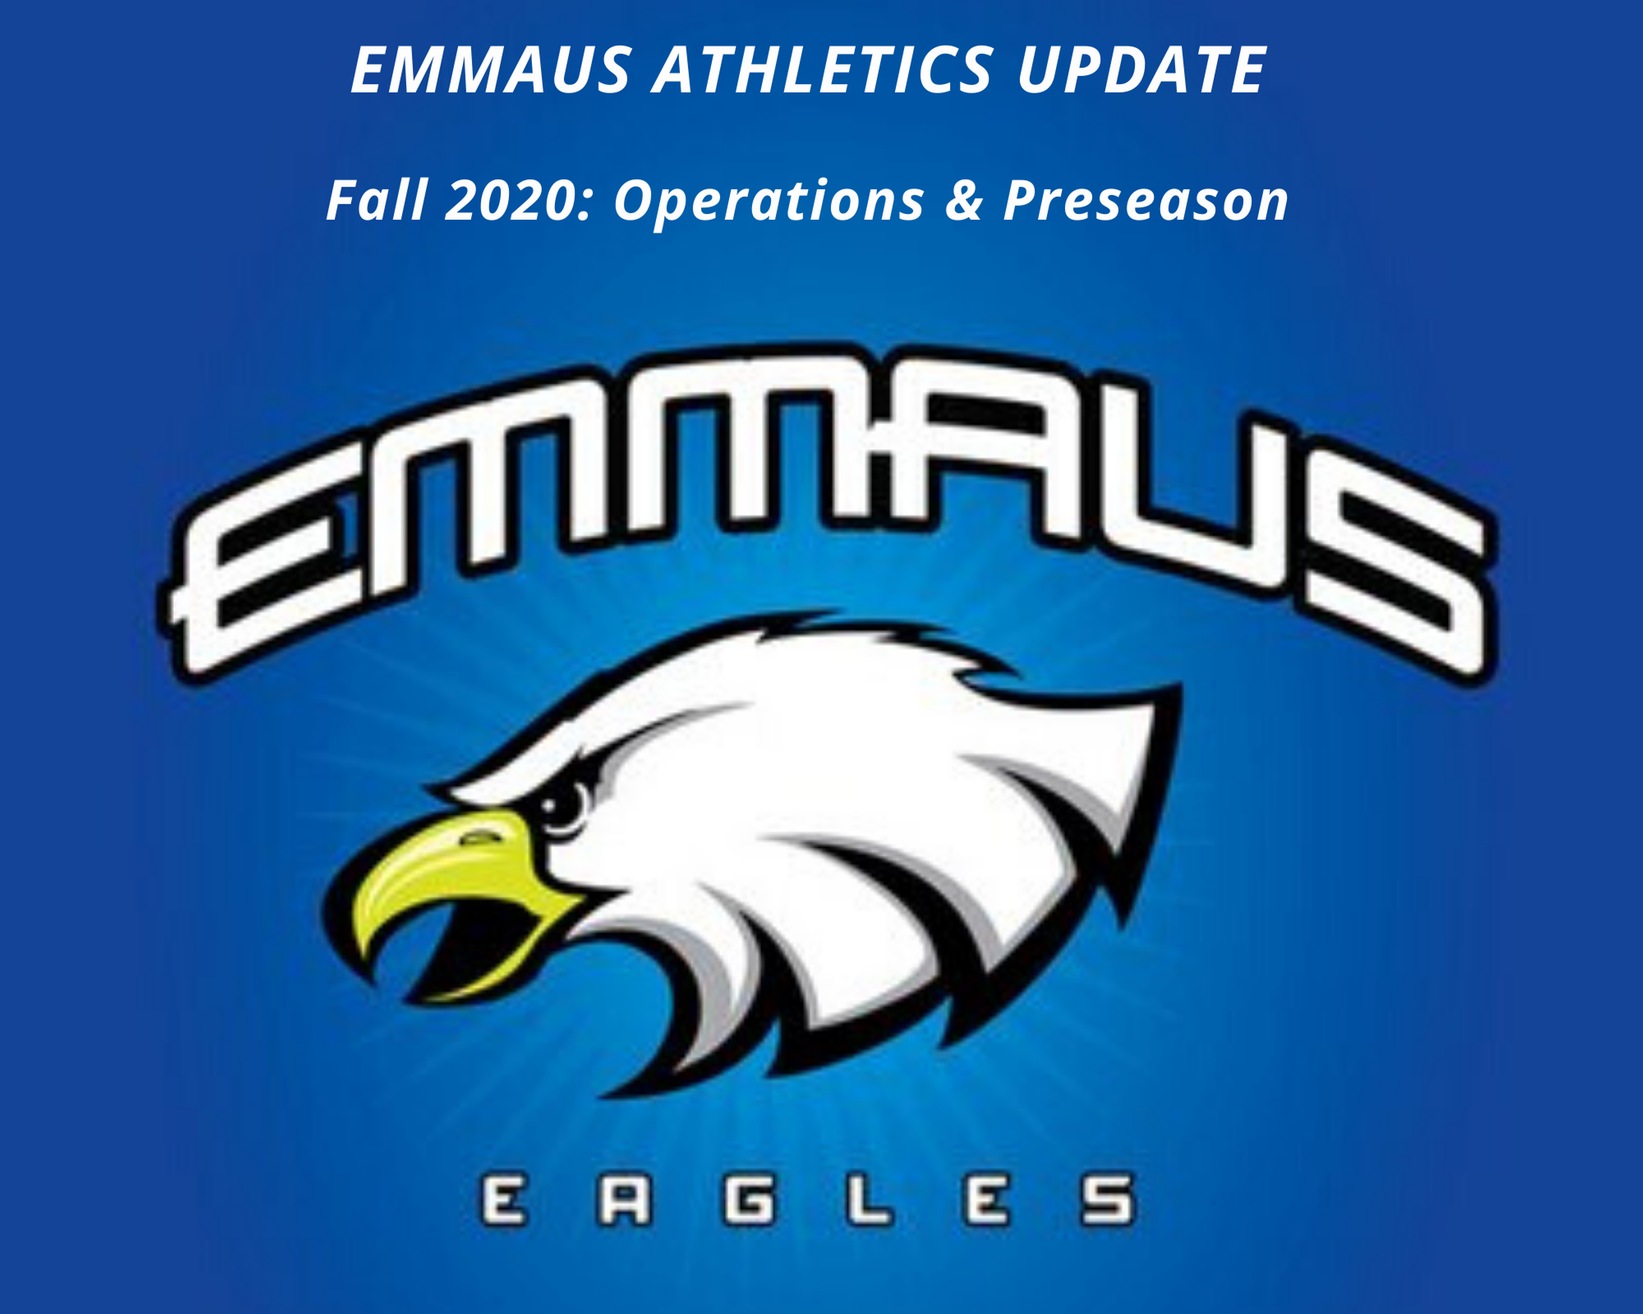 Athletics Update: Fall 2020 Preseason & Operations